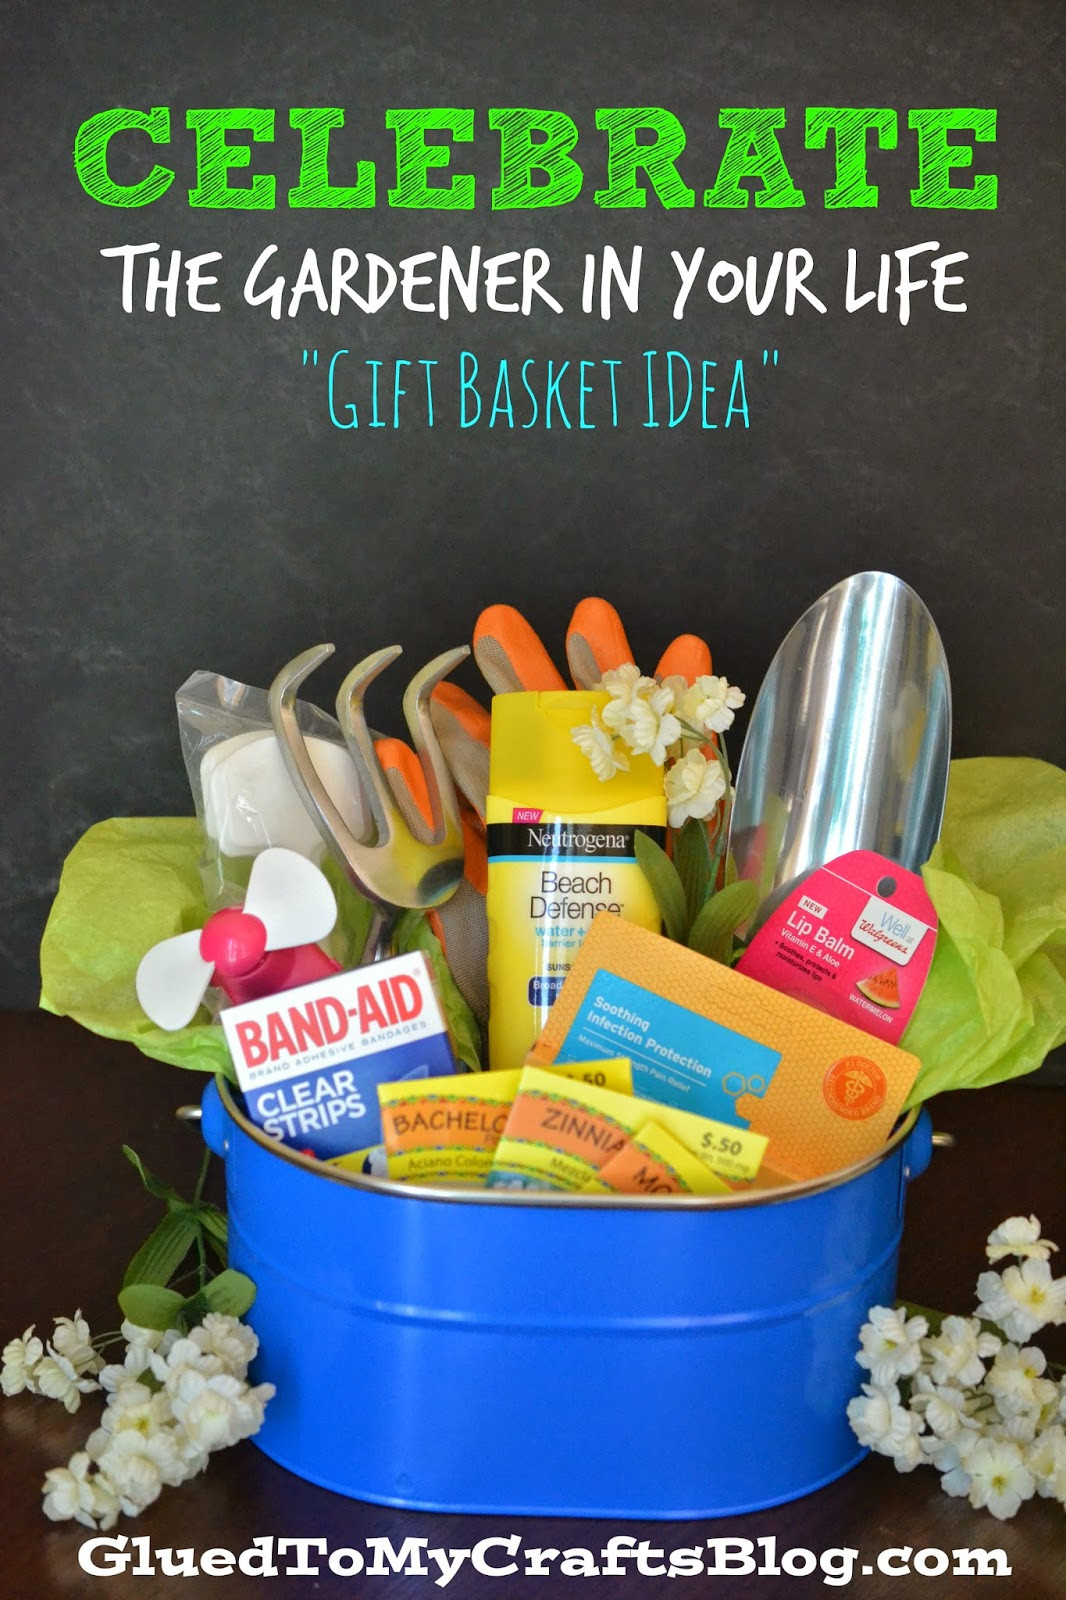 Gardening Gift Basket Ideas
 Celebrate The Gardener In Your Life Gift Basket Idea